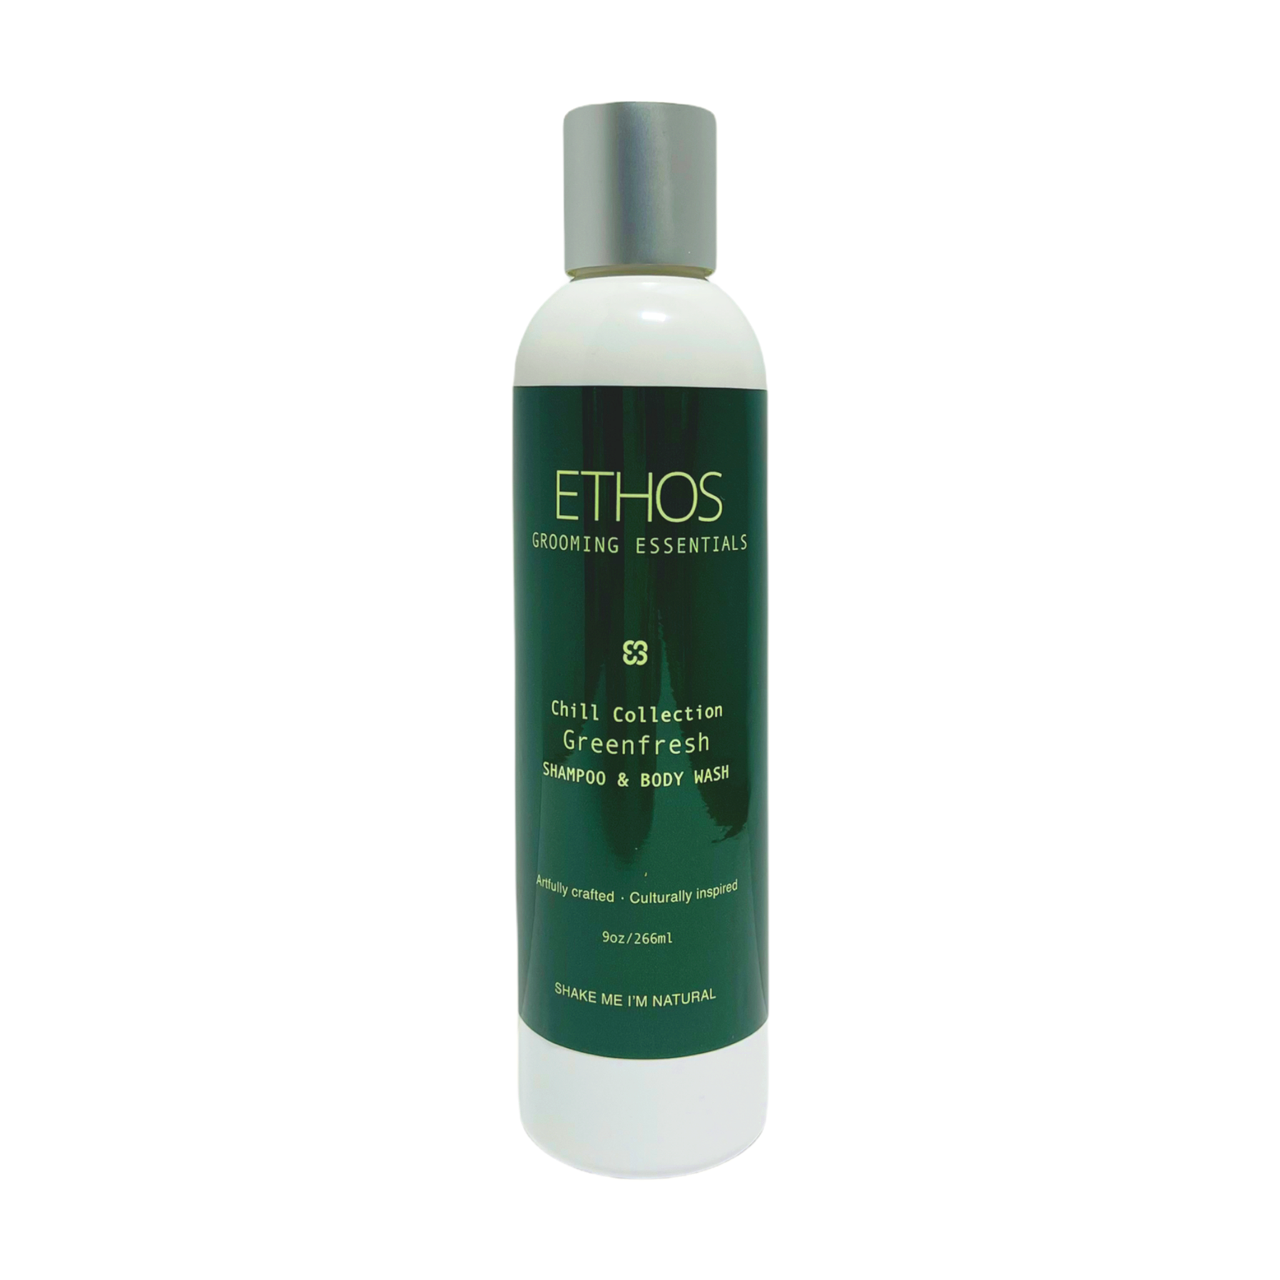 Greenfresh Shampoo and Body Wash 9 oz / 266 ml  bottle